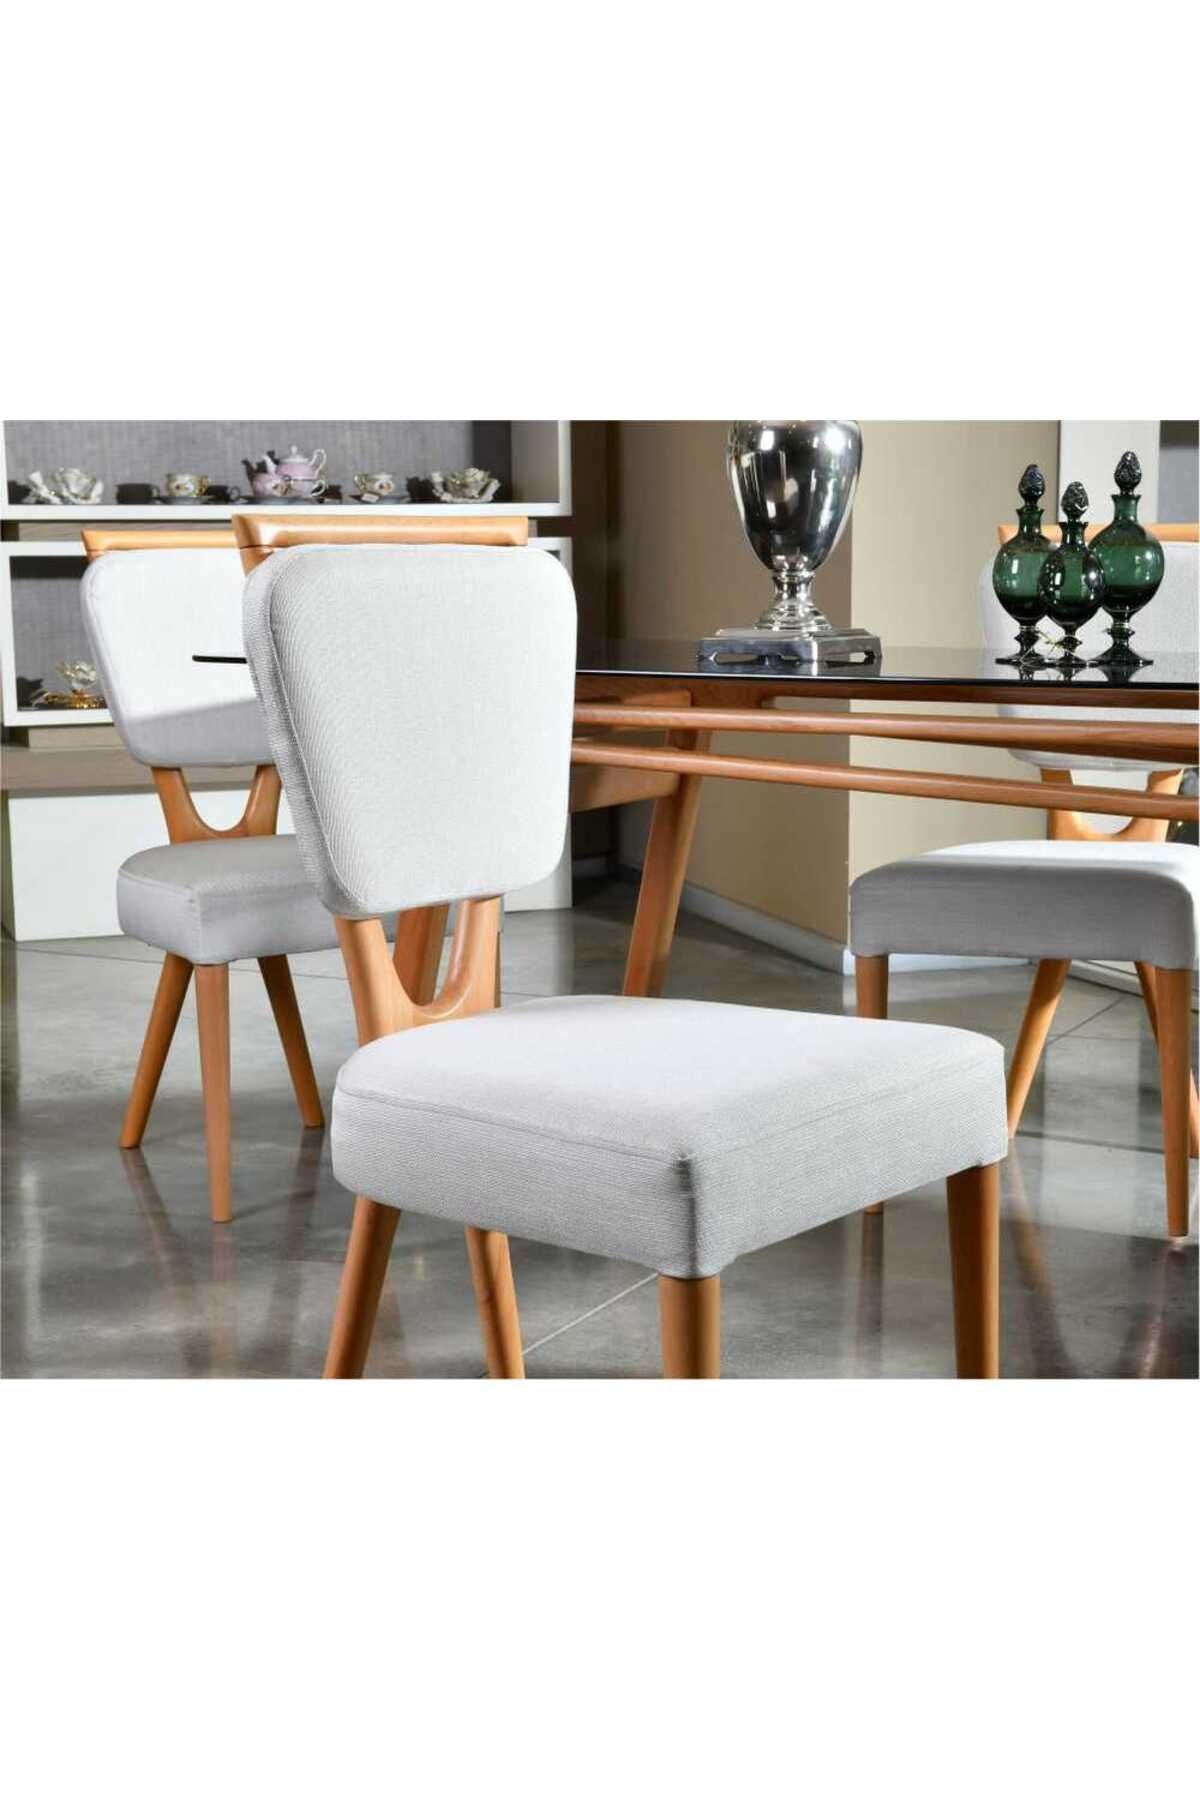 VOWTURKEY Palace Ahşap Tasarım Mutfak - Salon Sandalyesi